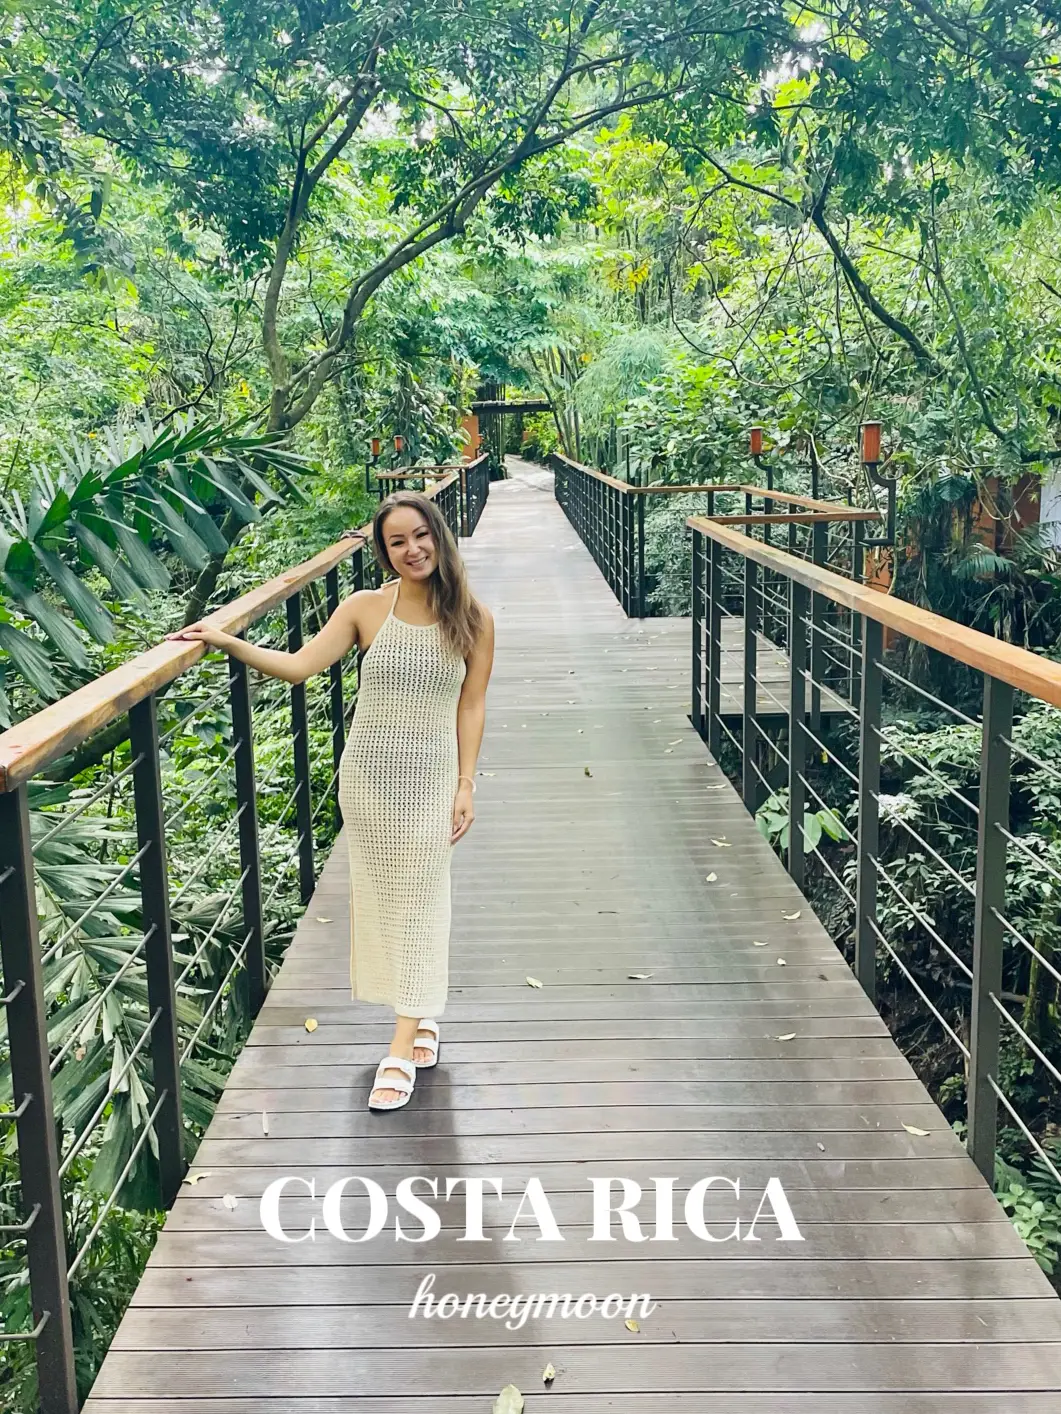 The Traditional Drink of Costa Rica: Cacique Guaro - Costa Rica Star News